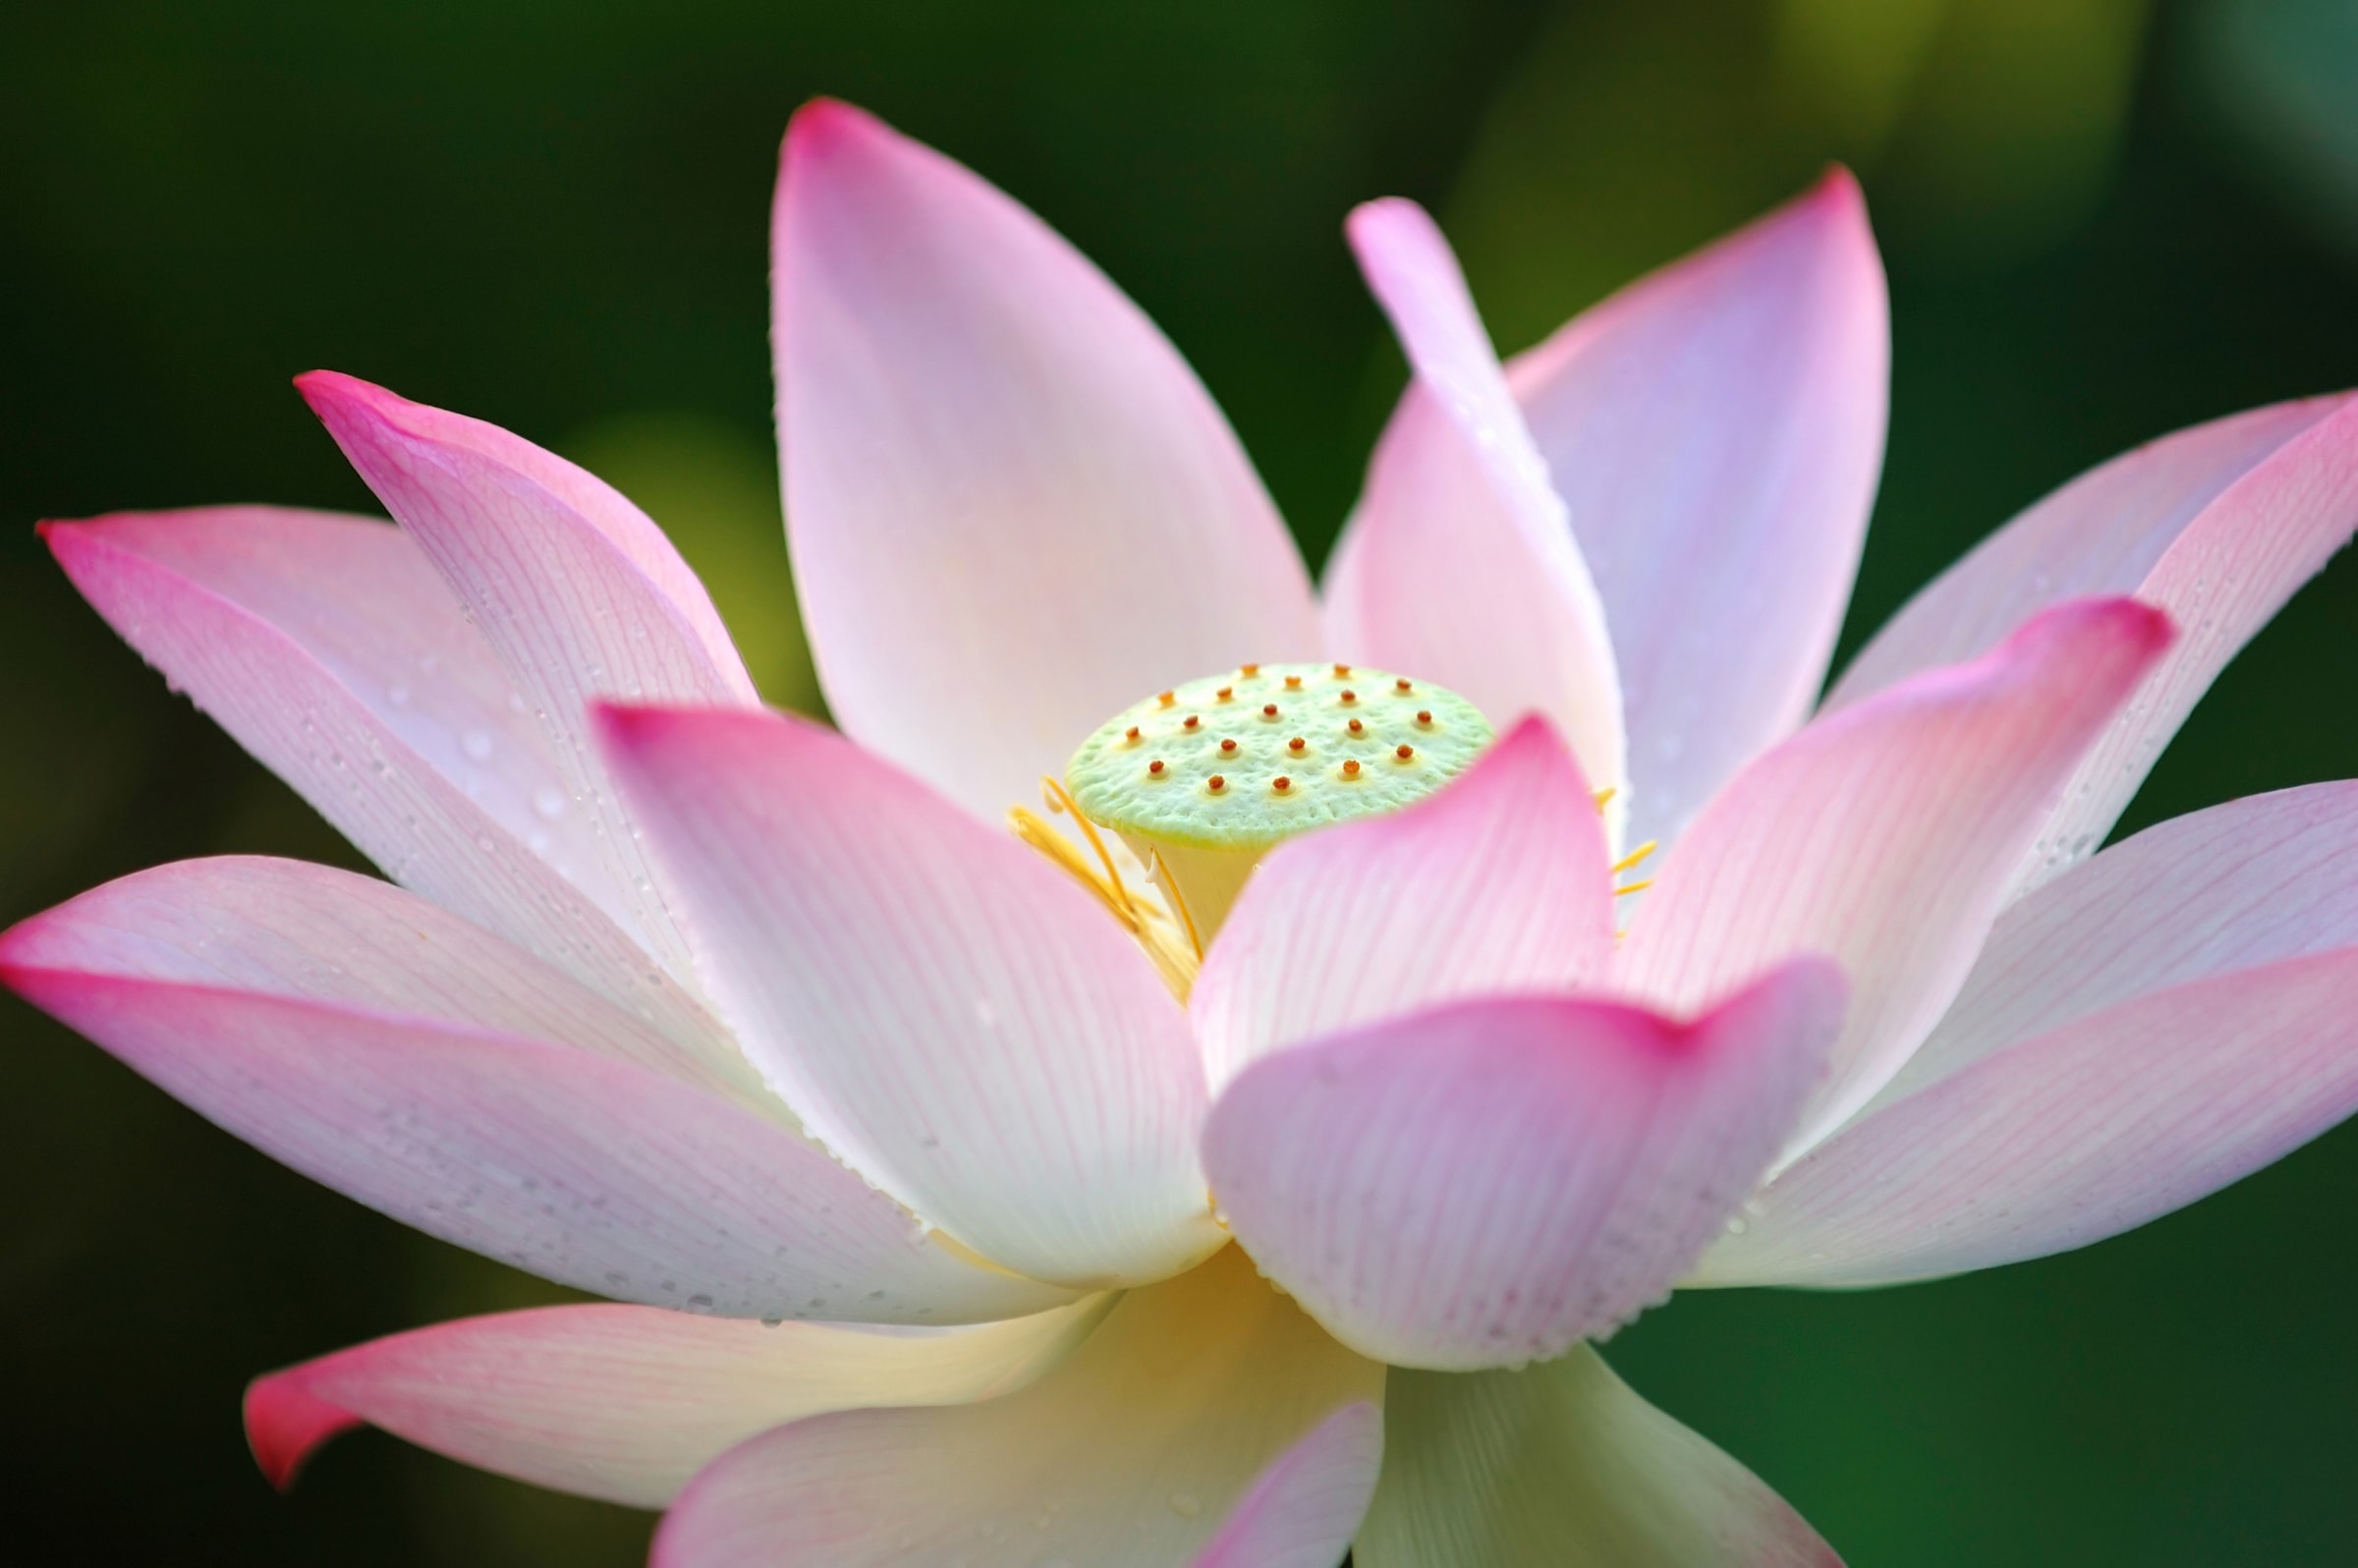 Papermoon Fototapetas »Lotus Flower«